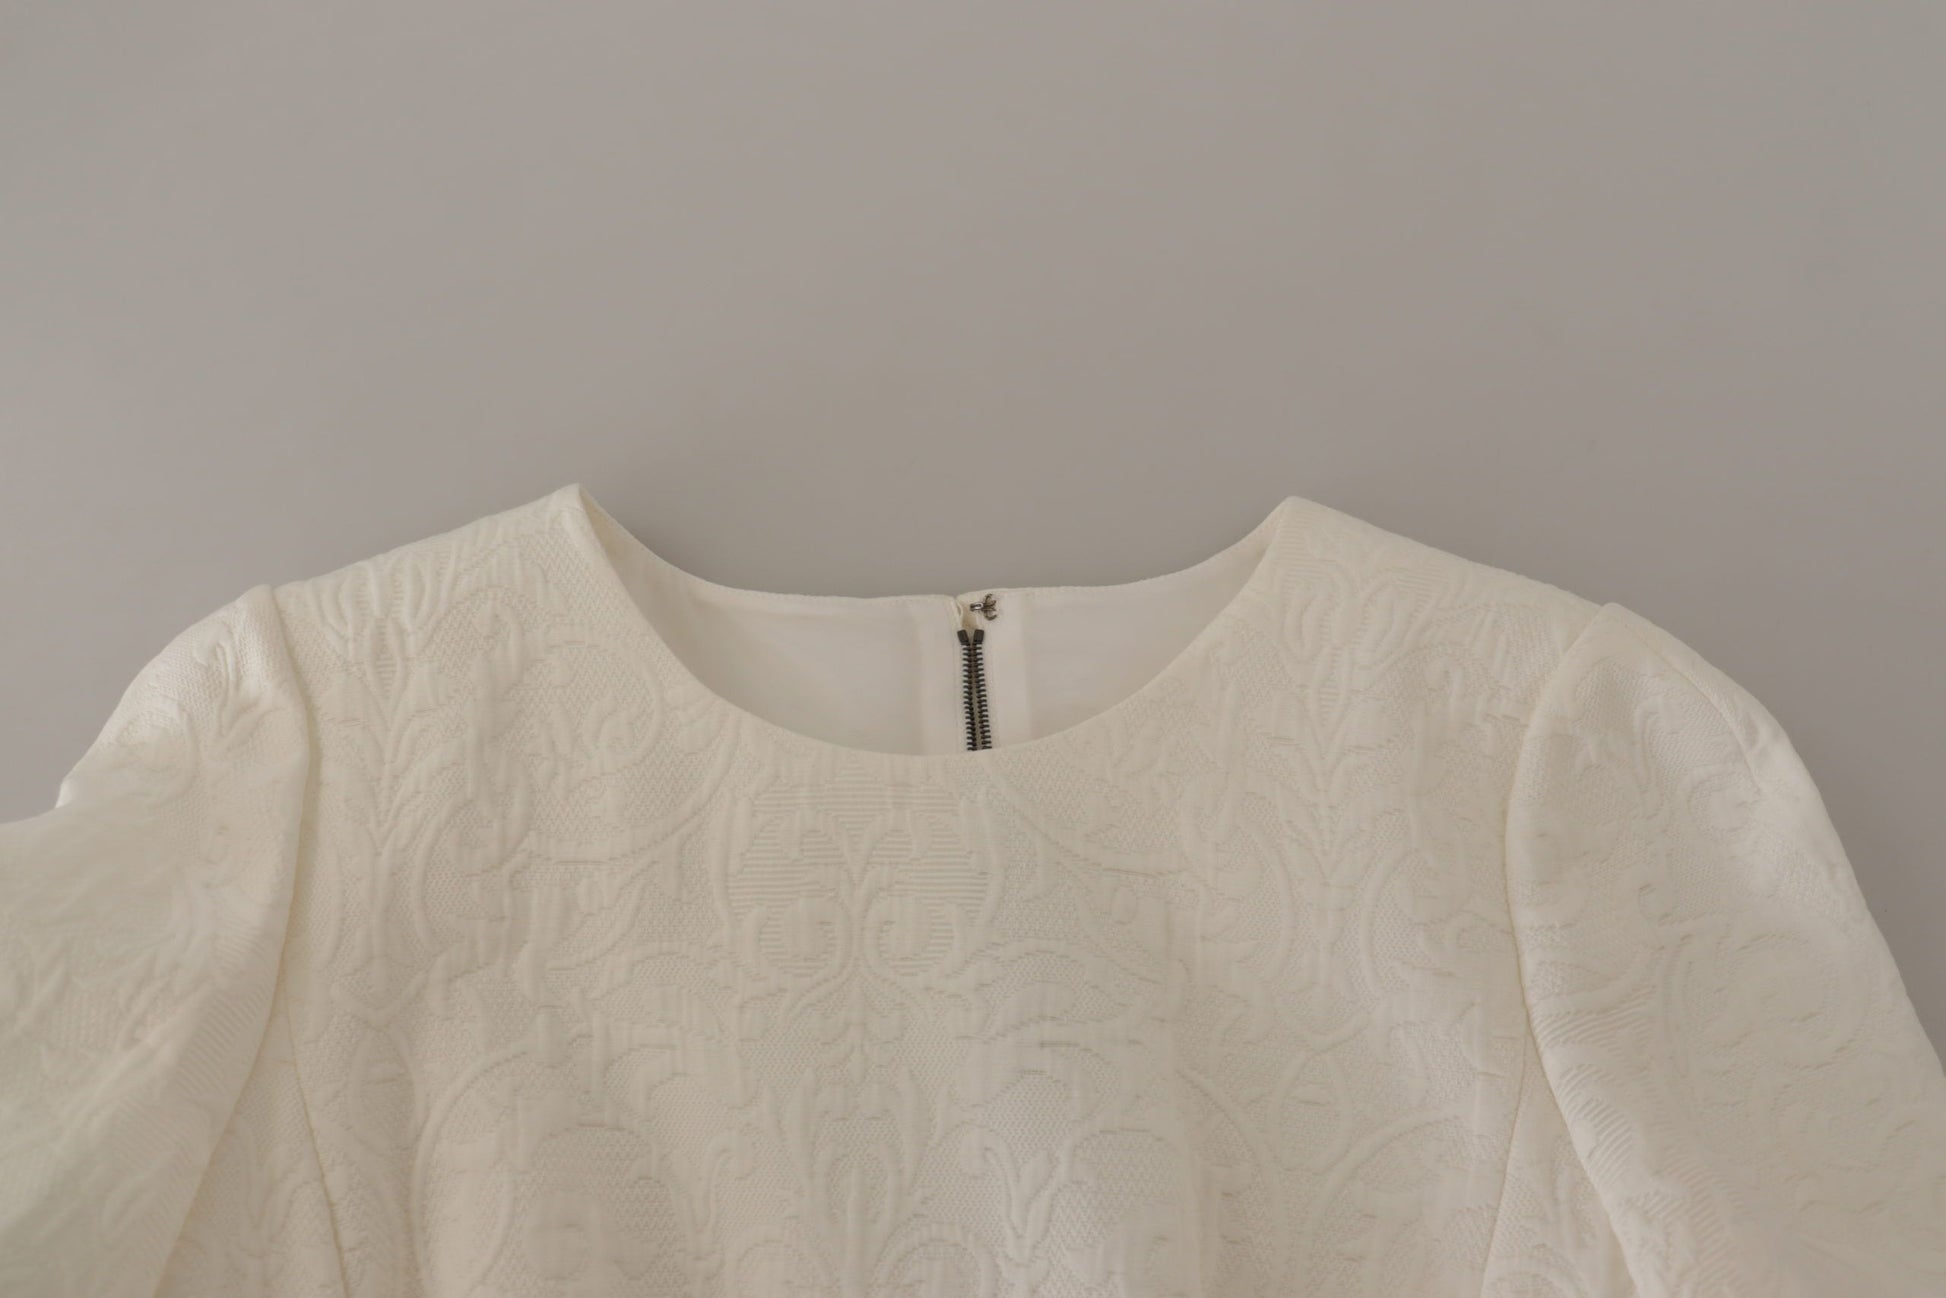 Exquisite Jacquard Midi Dress in White